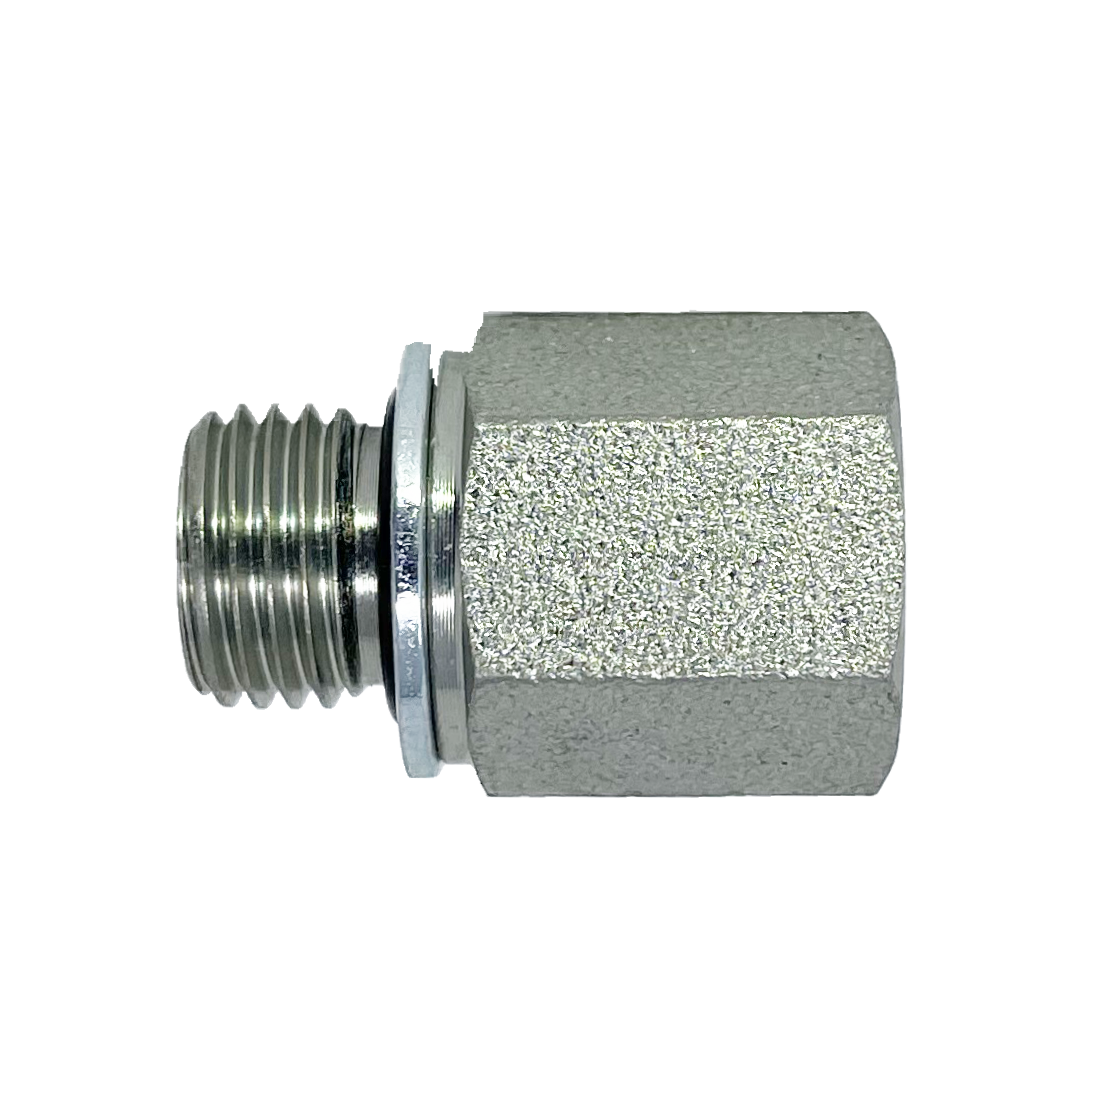 9635S-16-L10-04 : Adaptall Straight Adapter, Male L10 DIN Tube x Female 0.25 (1/4") NPT, Carbon Steel